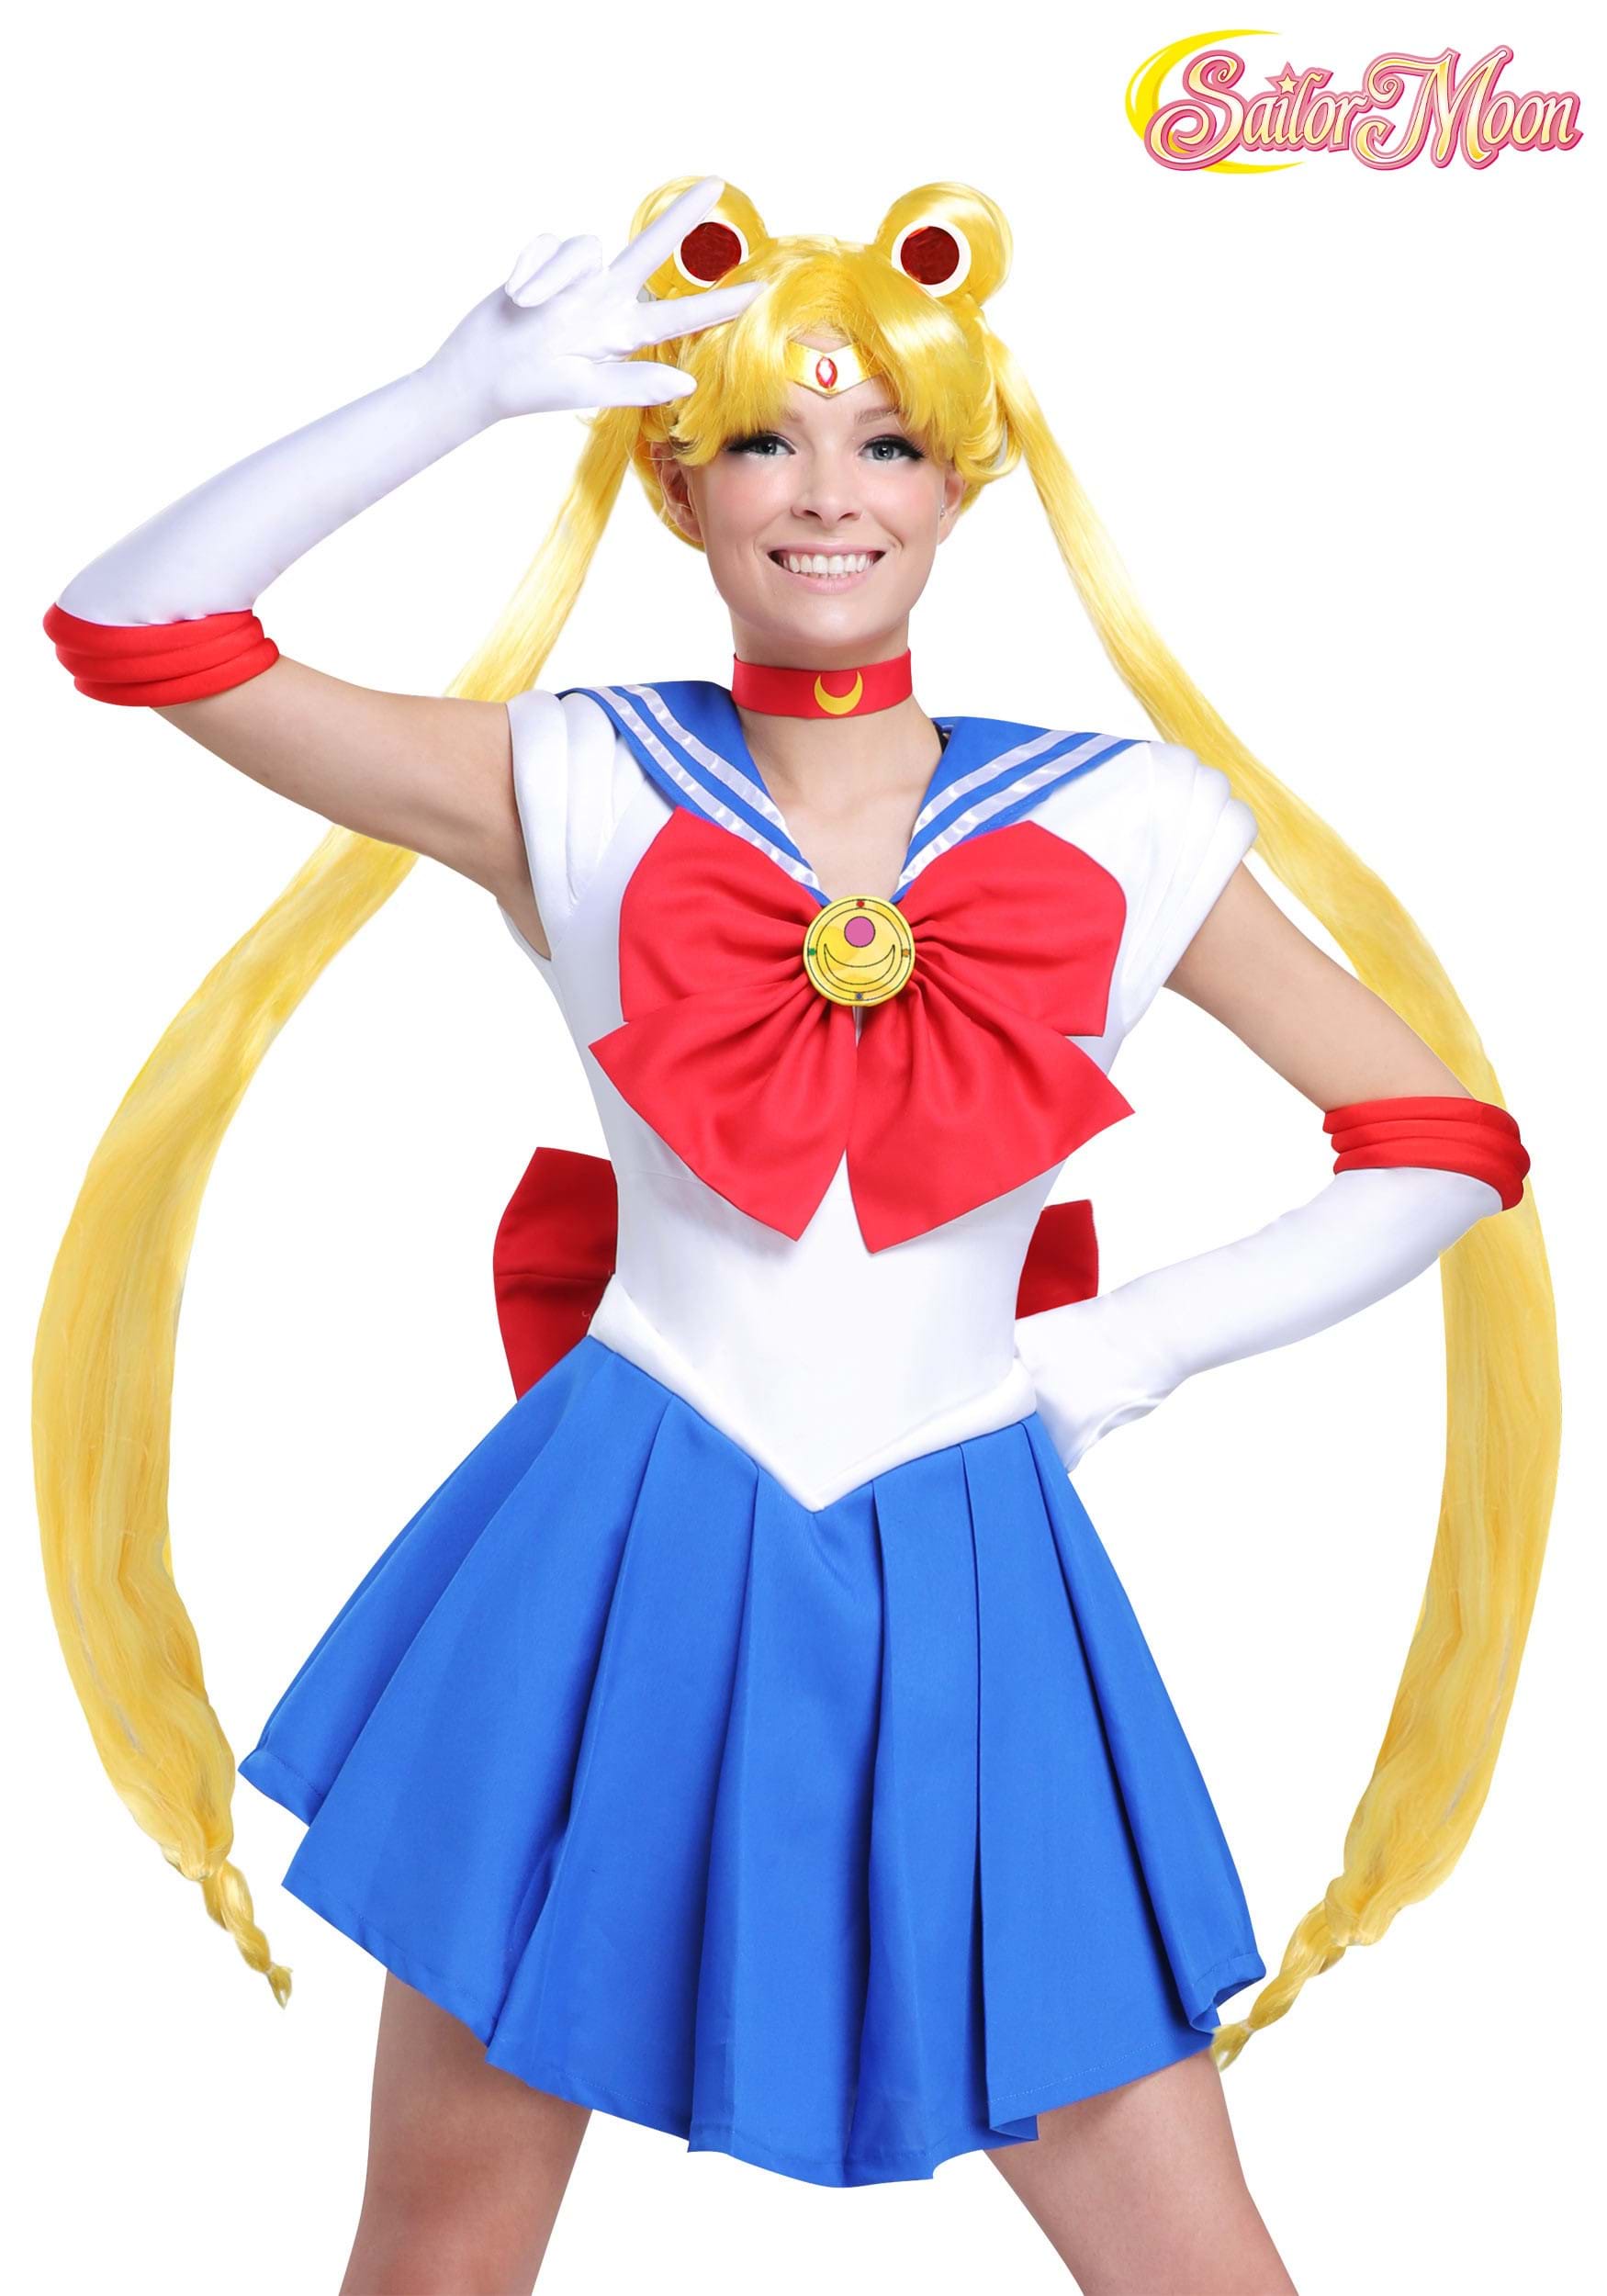 Sailor Moon Wig for Women, Anime Girl Wig